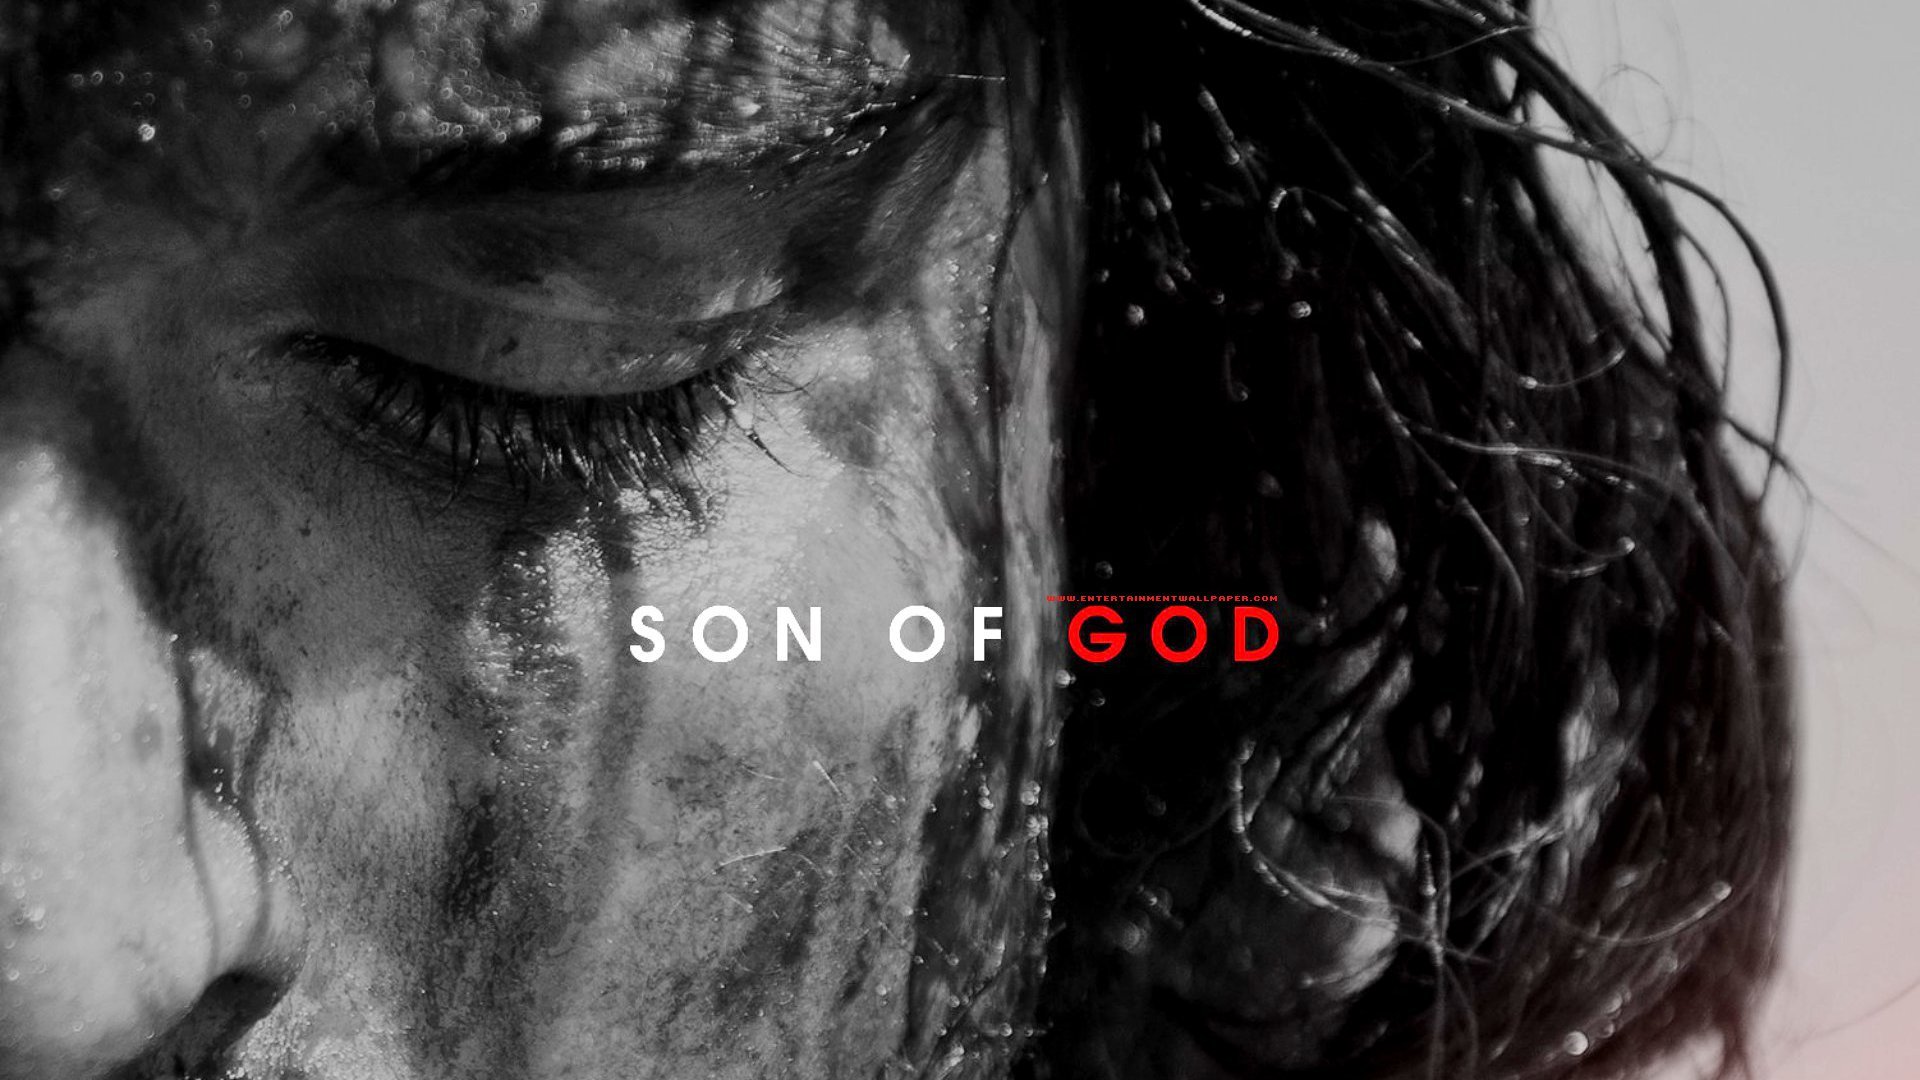 39+] Son of God Wallpaper HD - WallpaperSafari